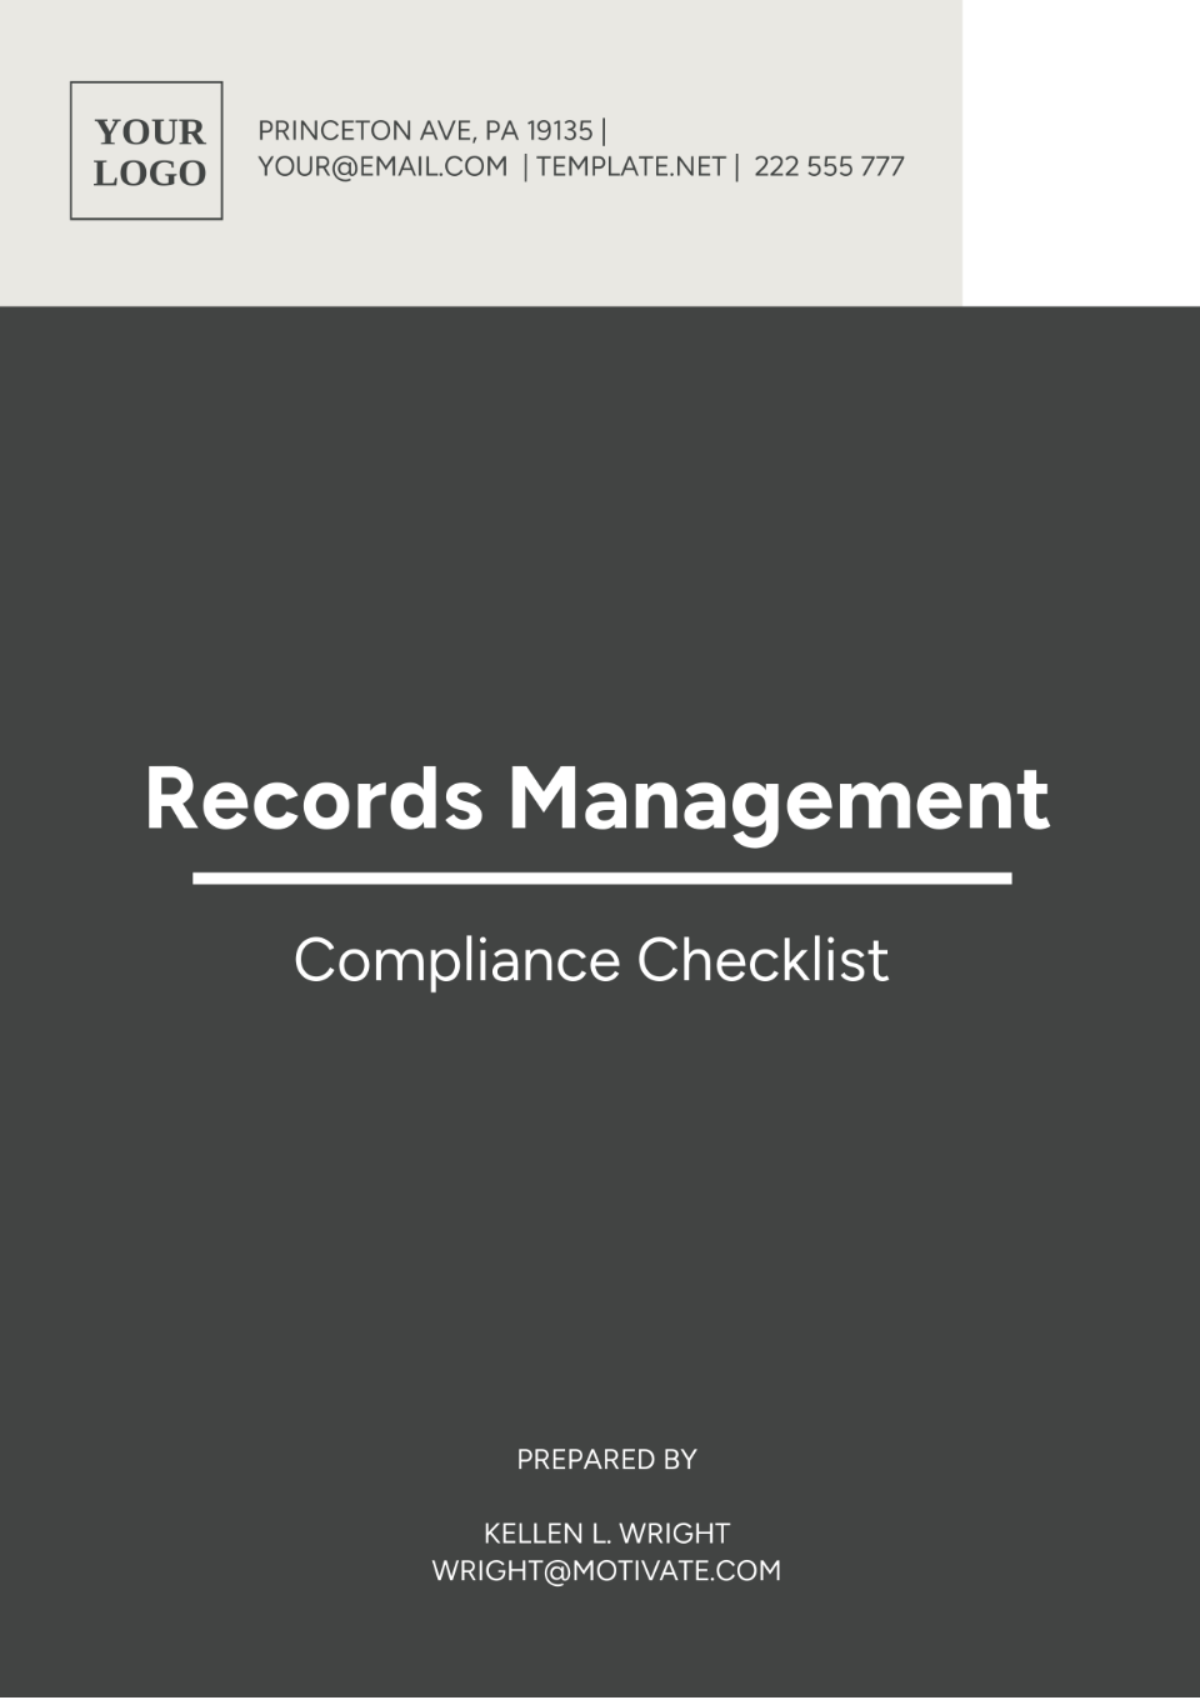 Records Management Compliance Checklist Template